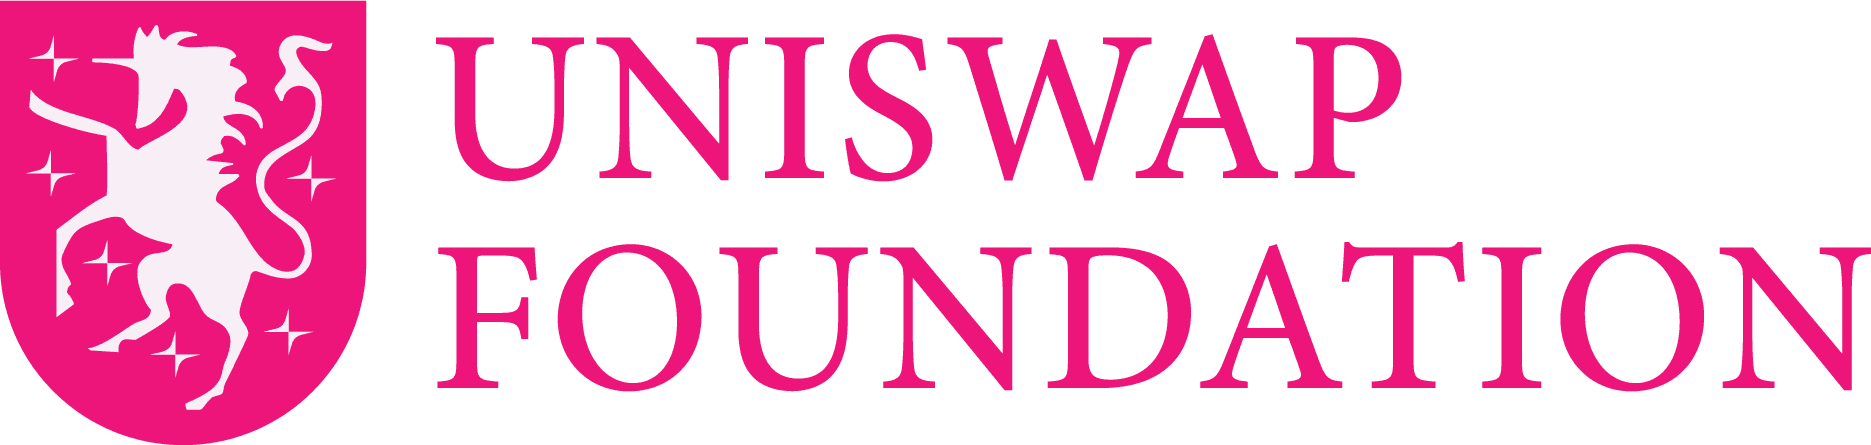 uniswap-foundation-logo